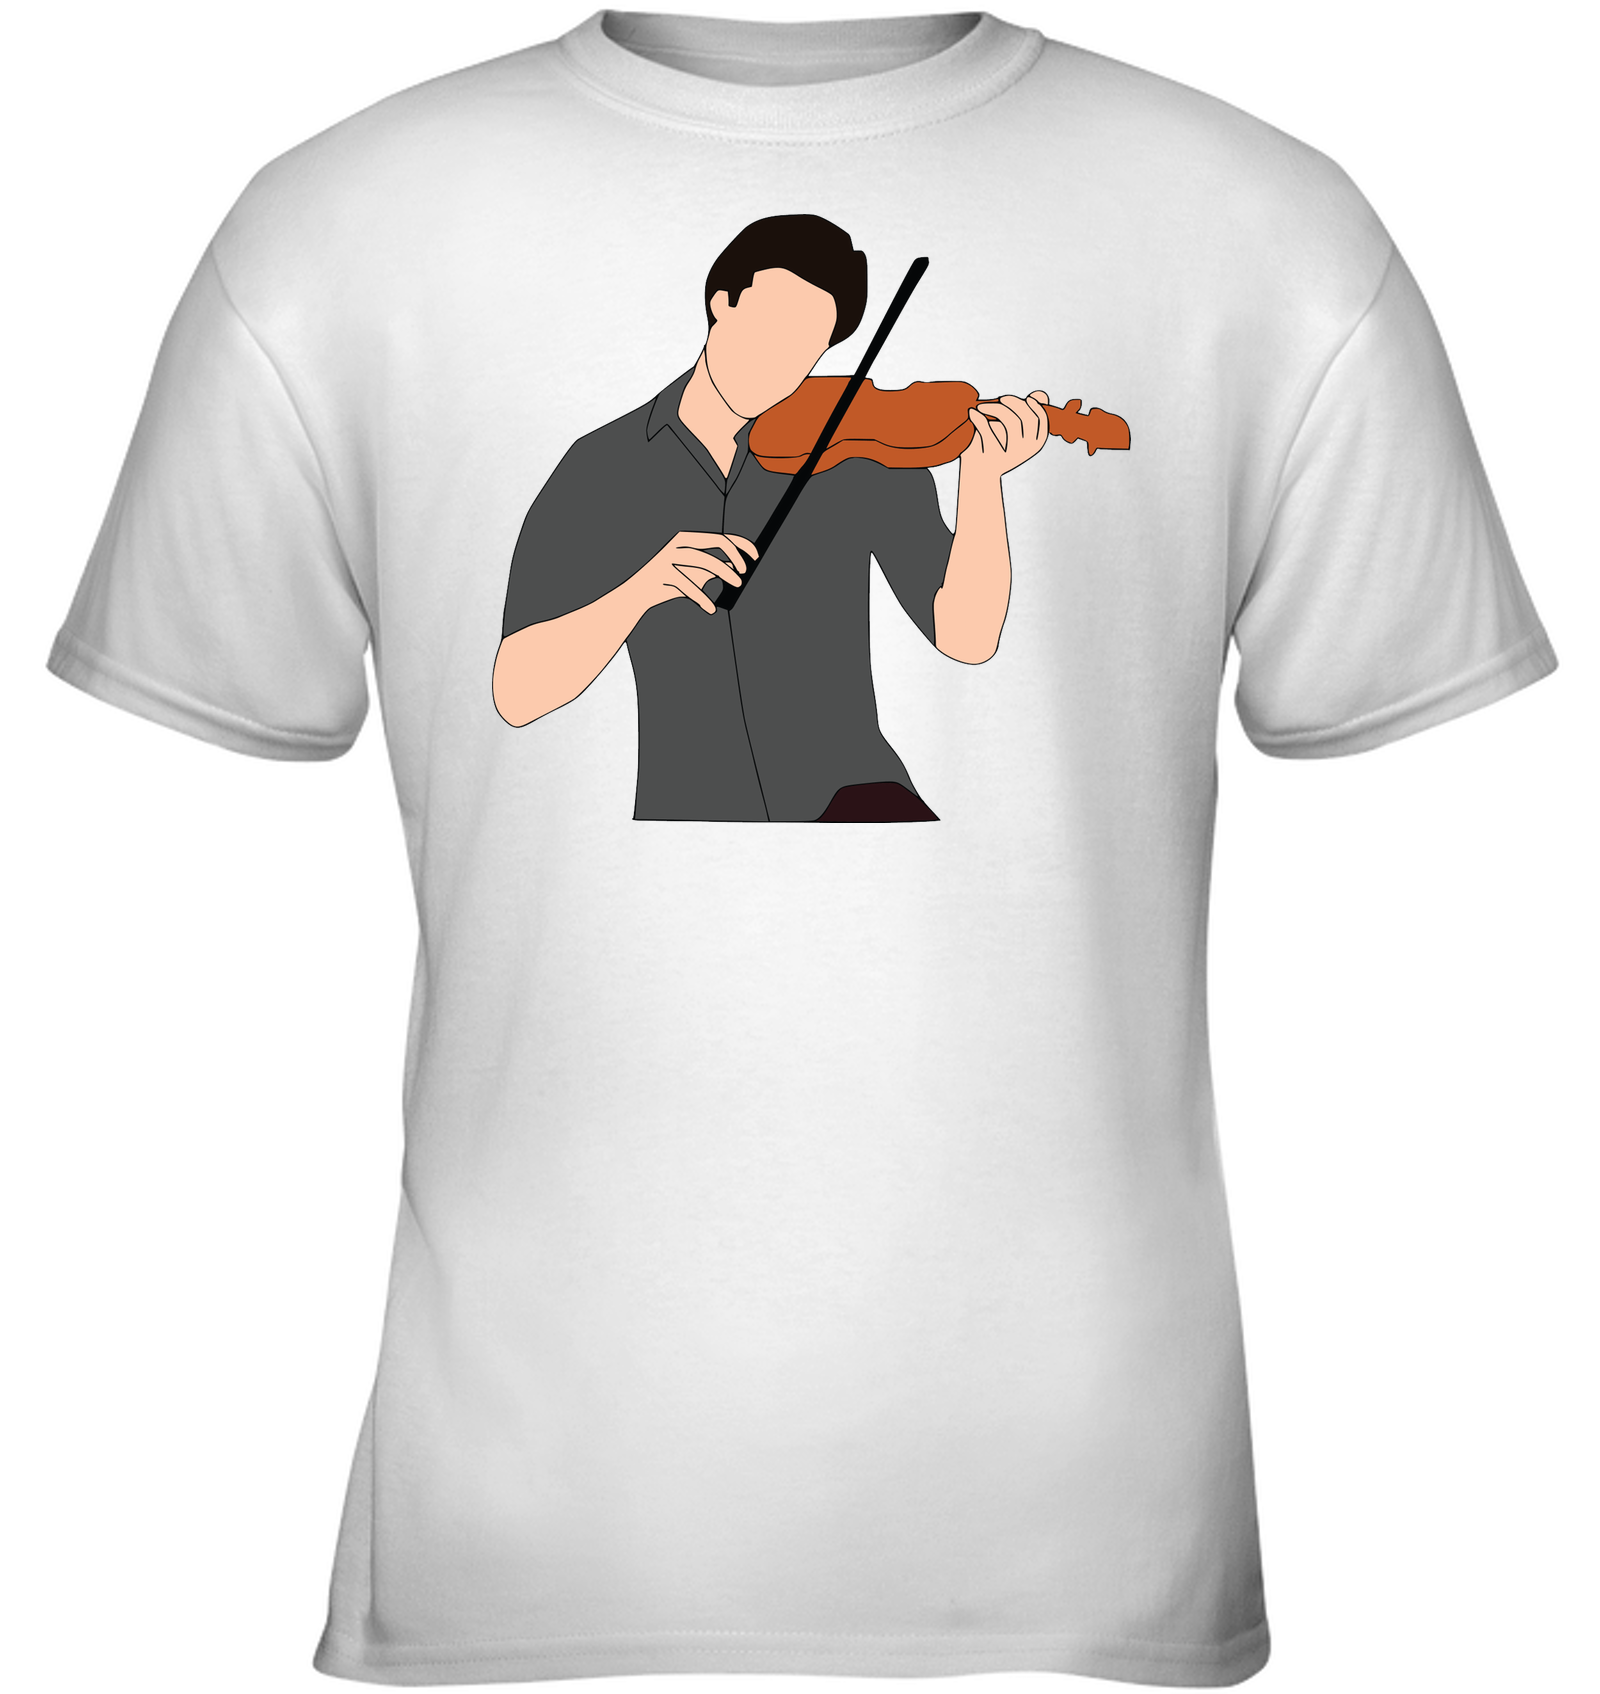 Guy Playin the Violin - Gildan Youth Short Sleeve T-Shirt